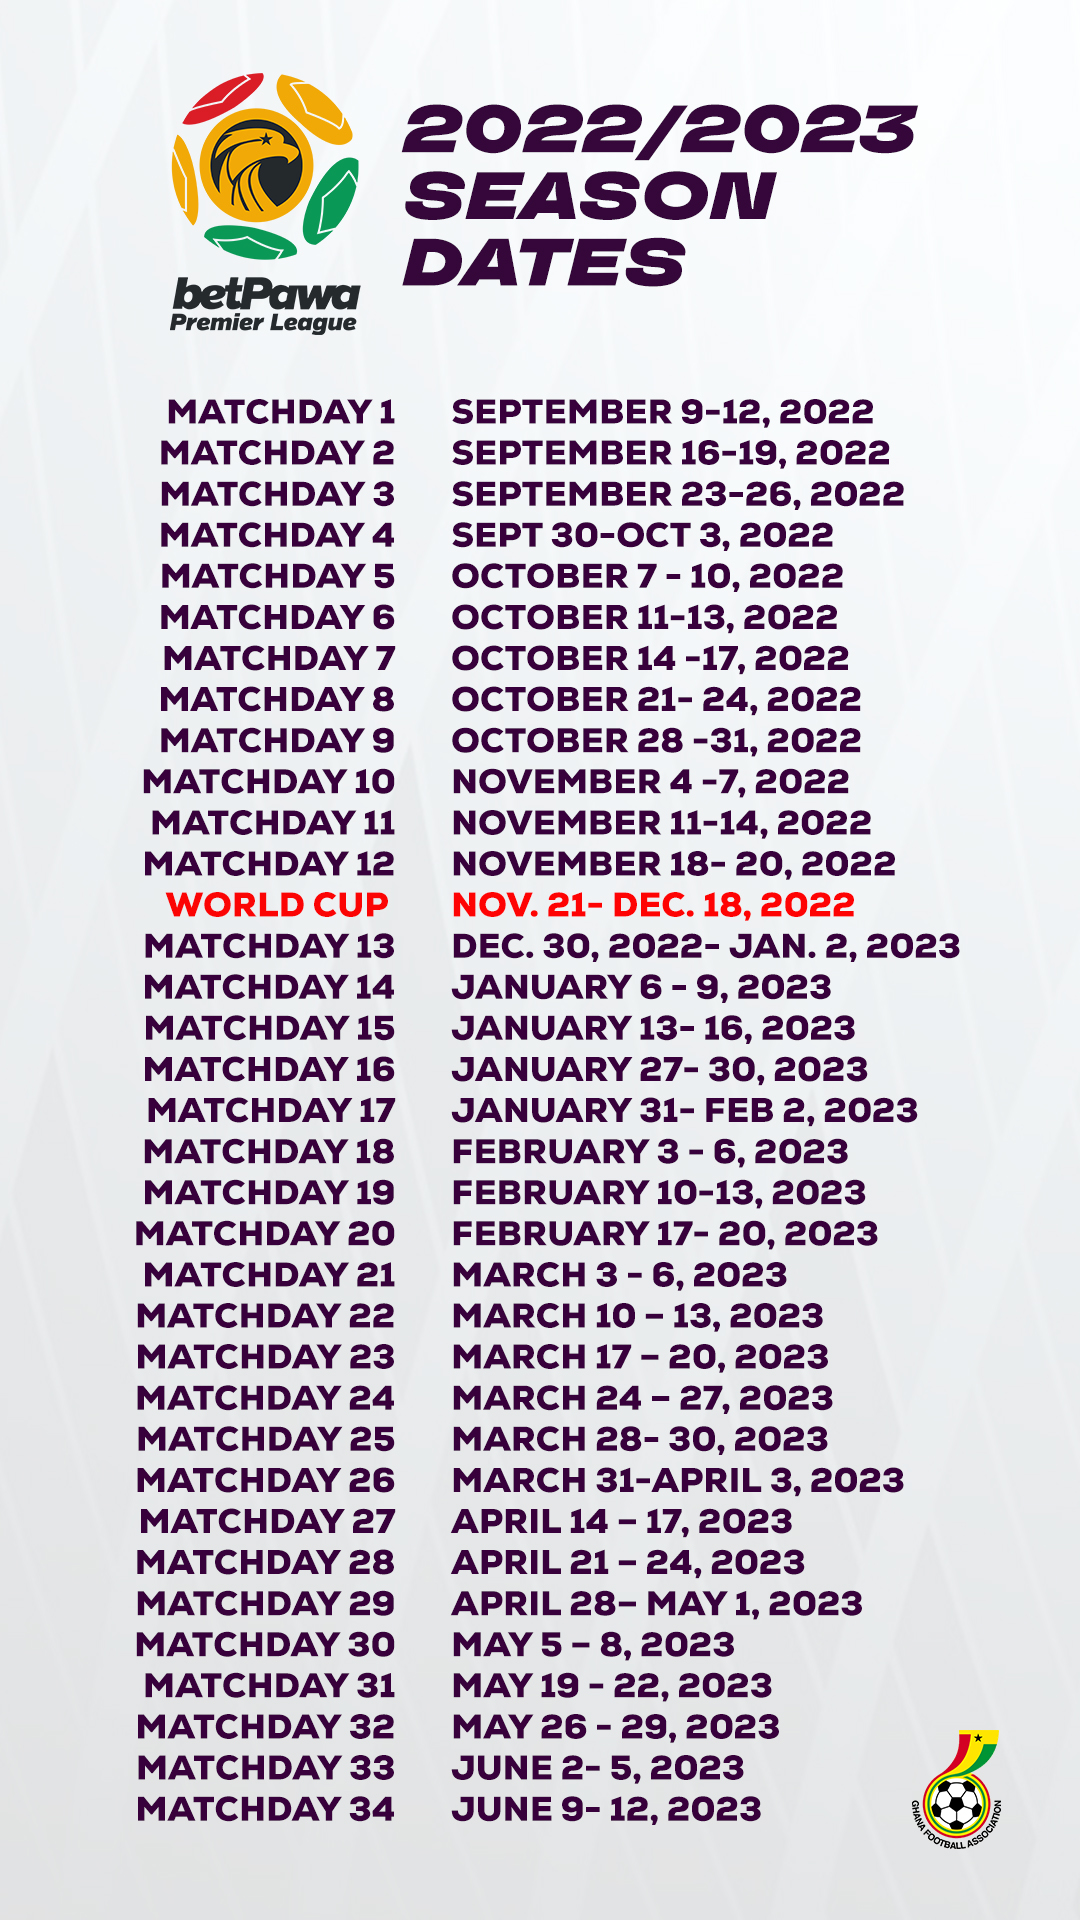 2022/23 betPawa Premier League dates announced